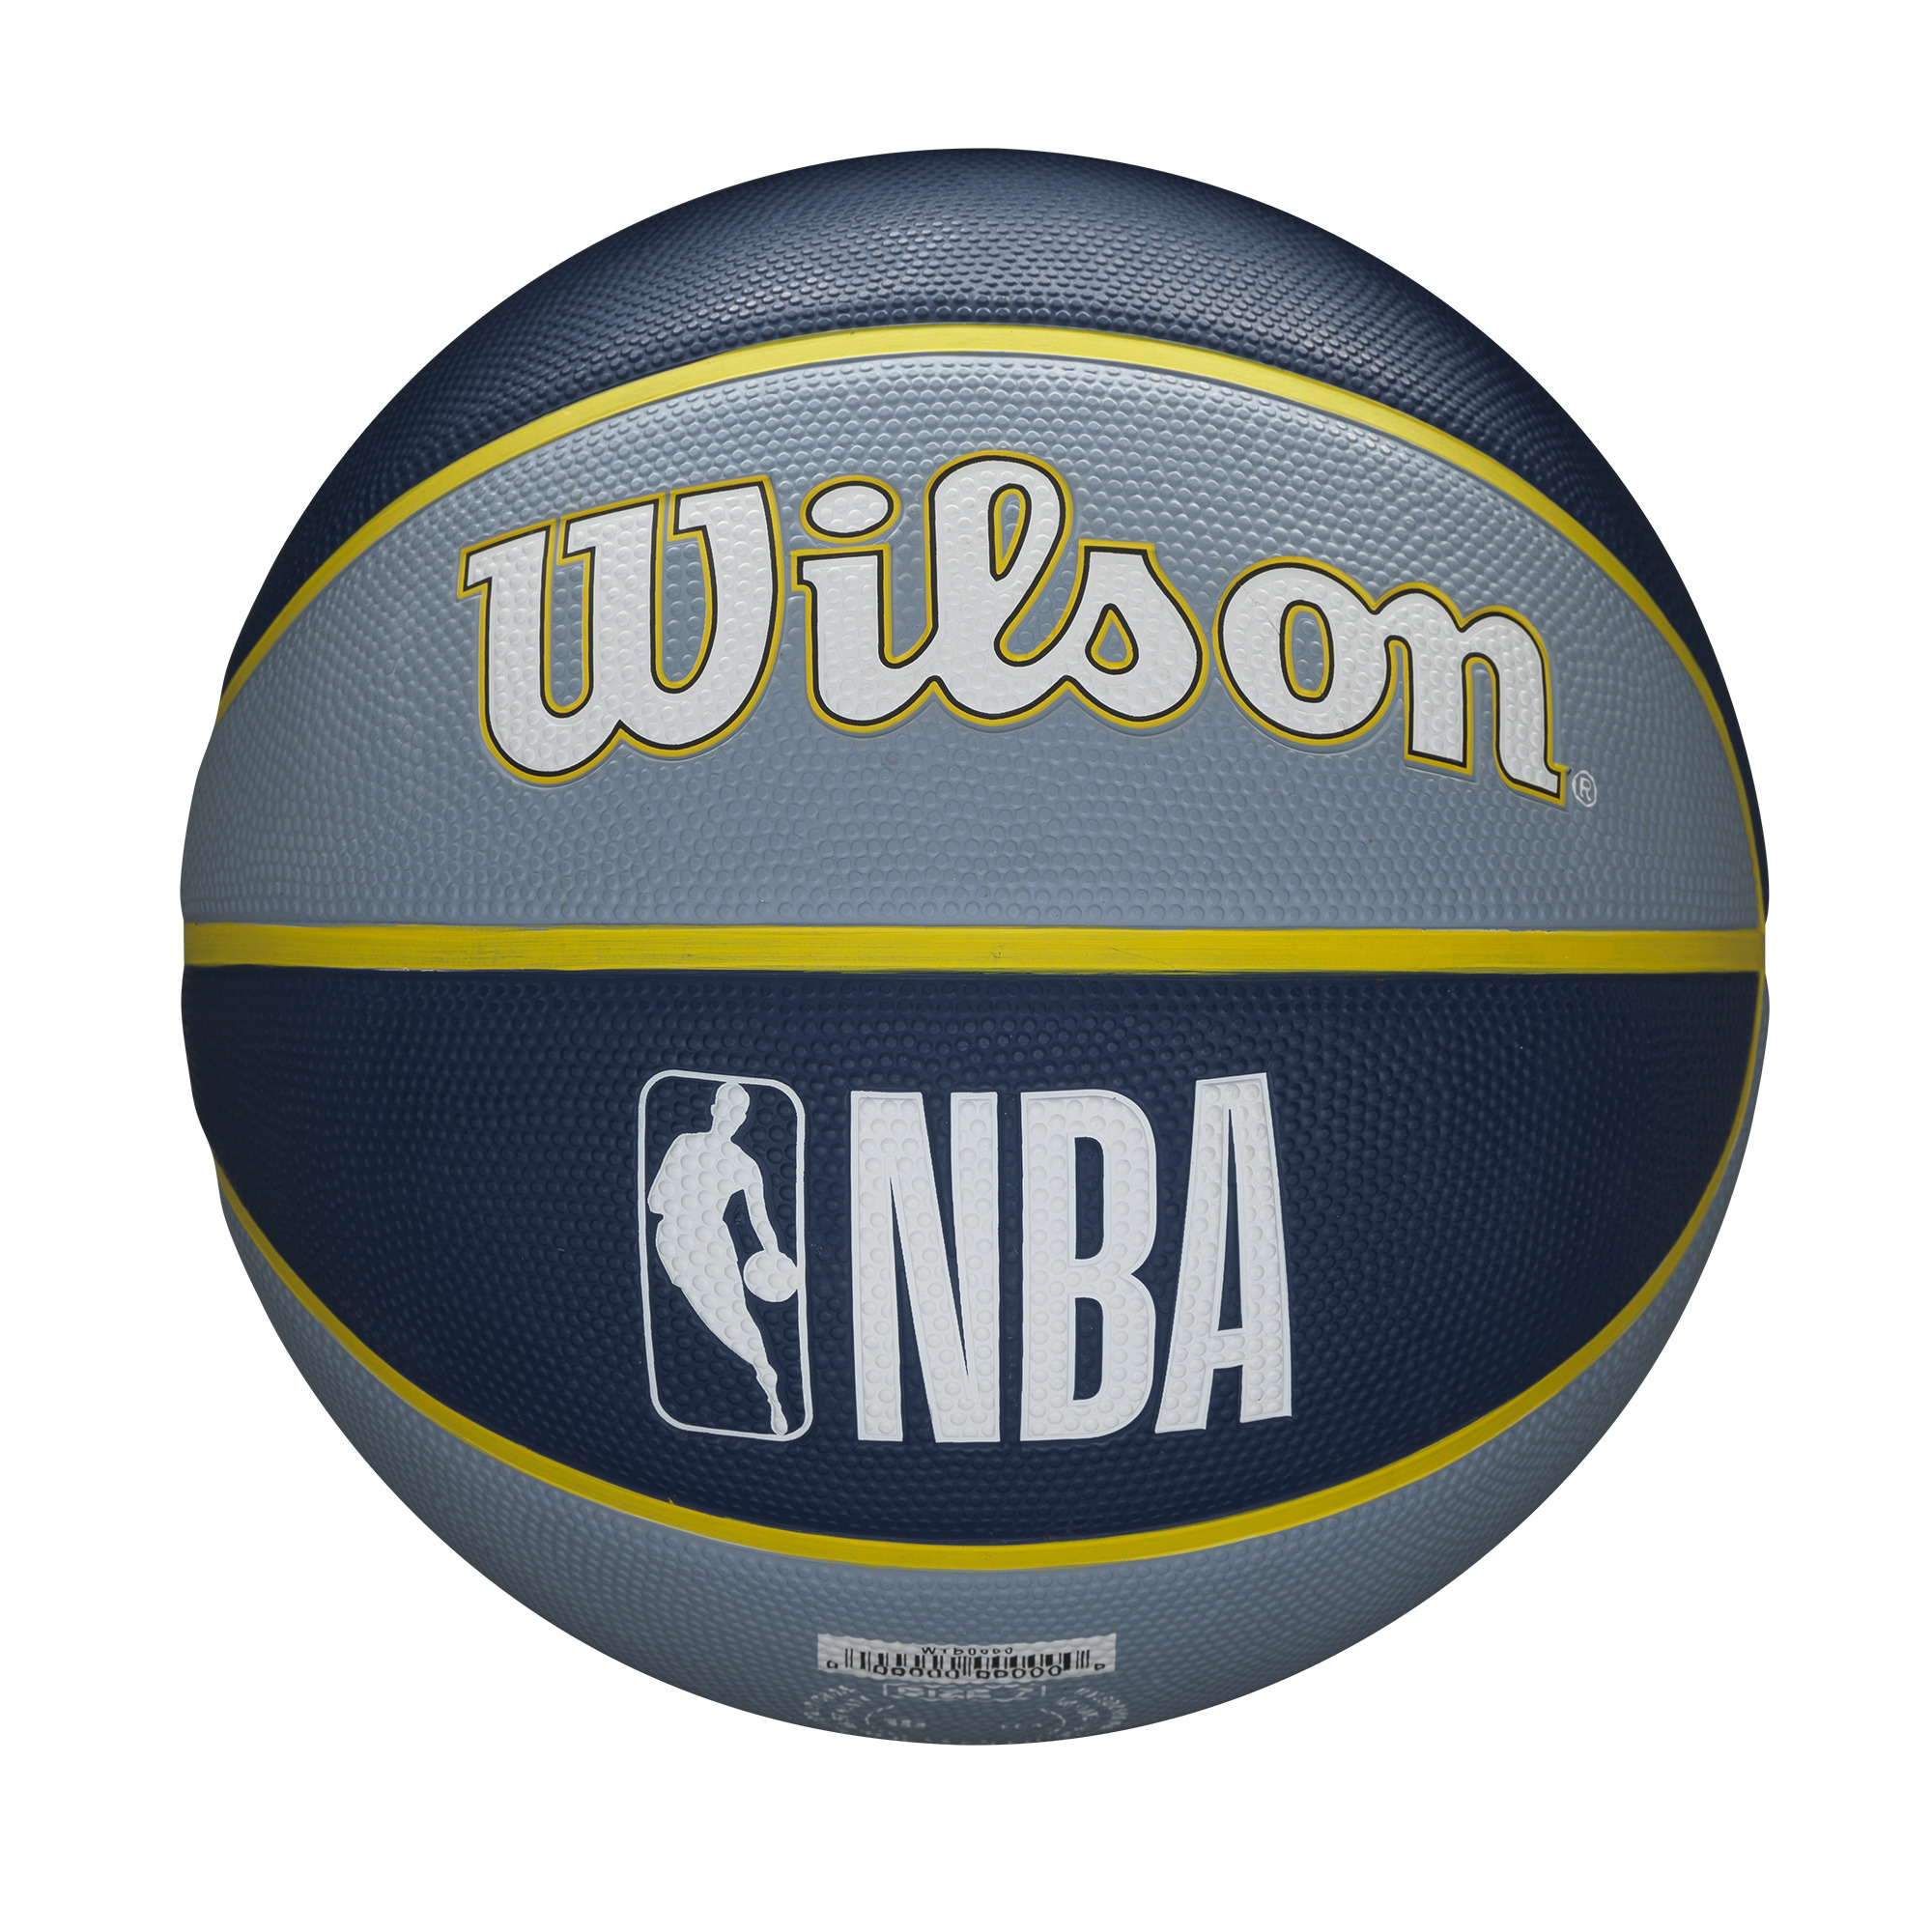 Ballons de basket NBA Team Tribute Memphis Grizzlies